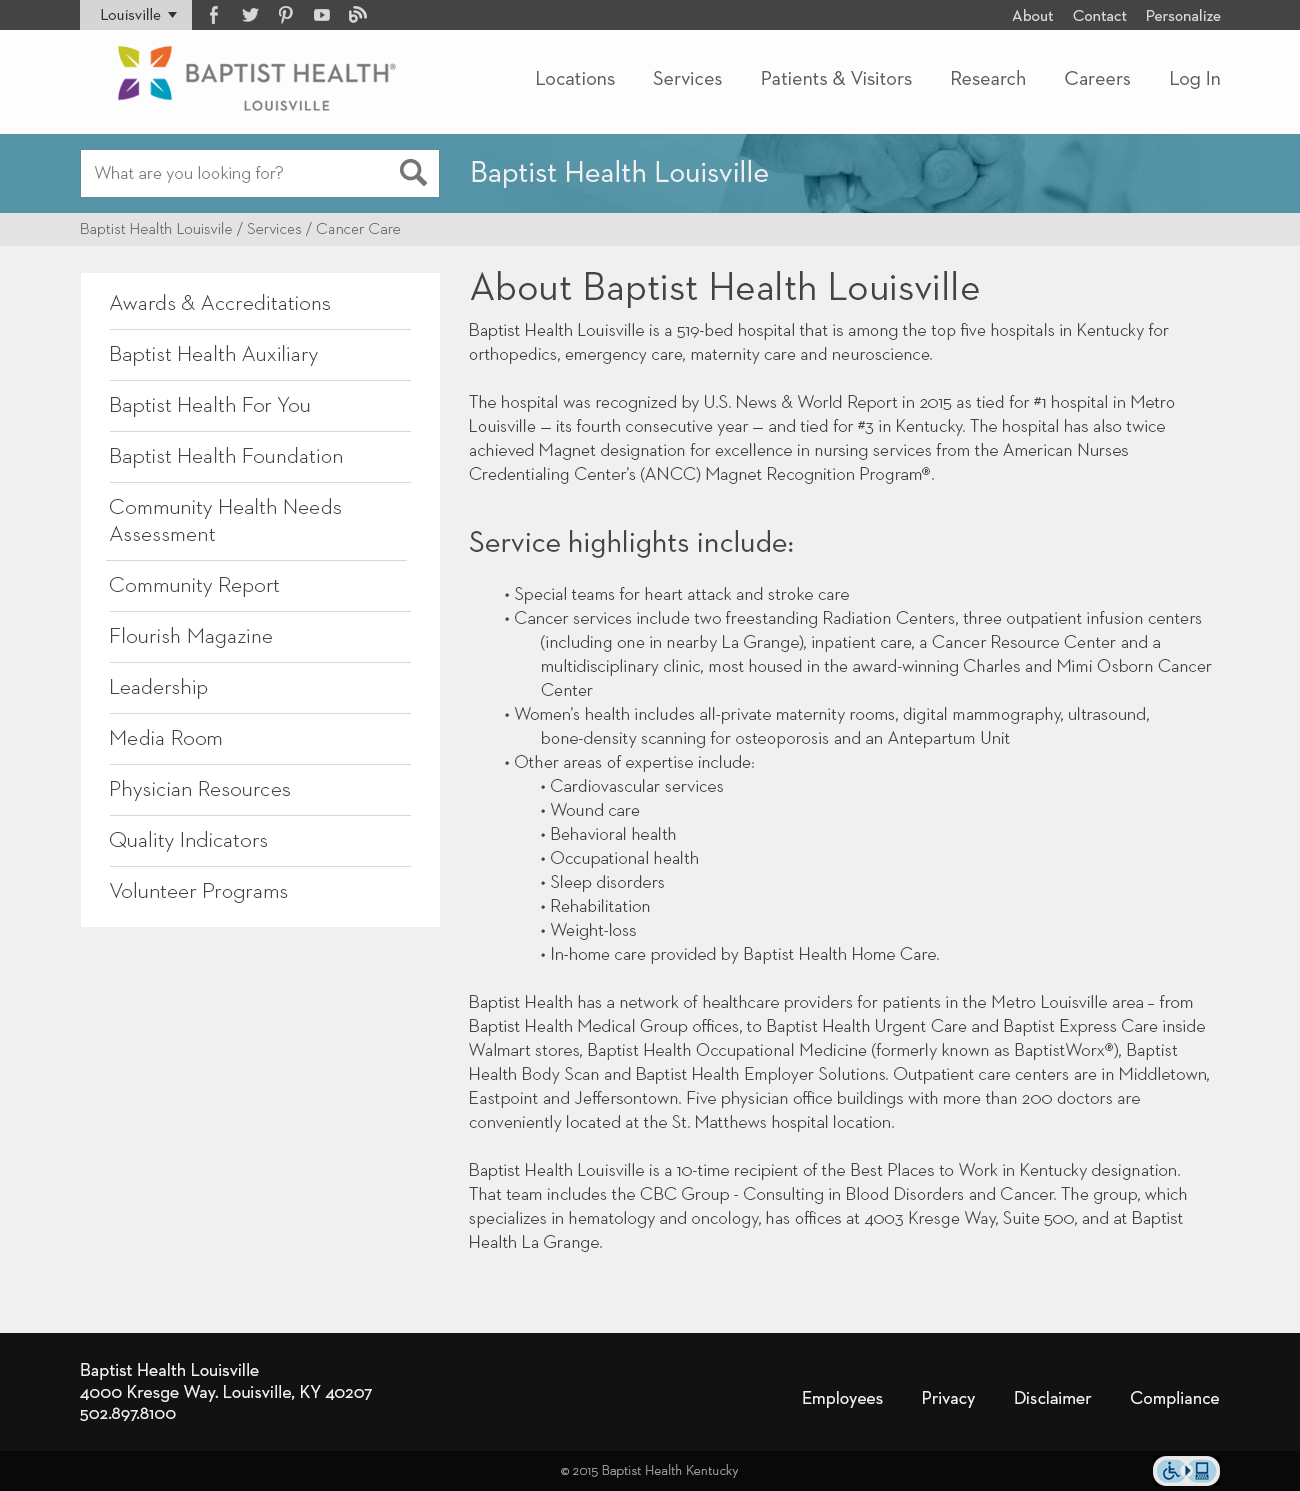 Baptist health website